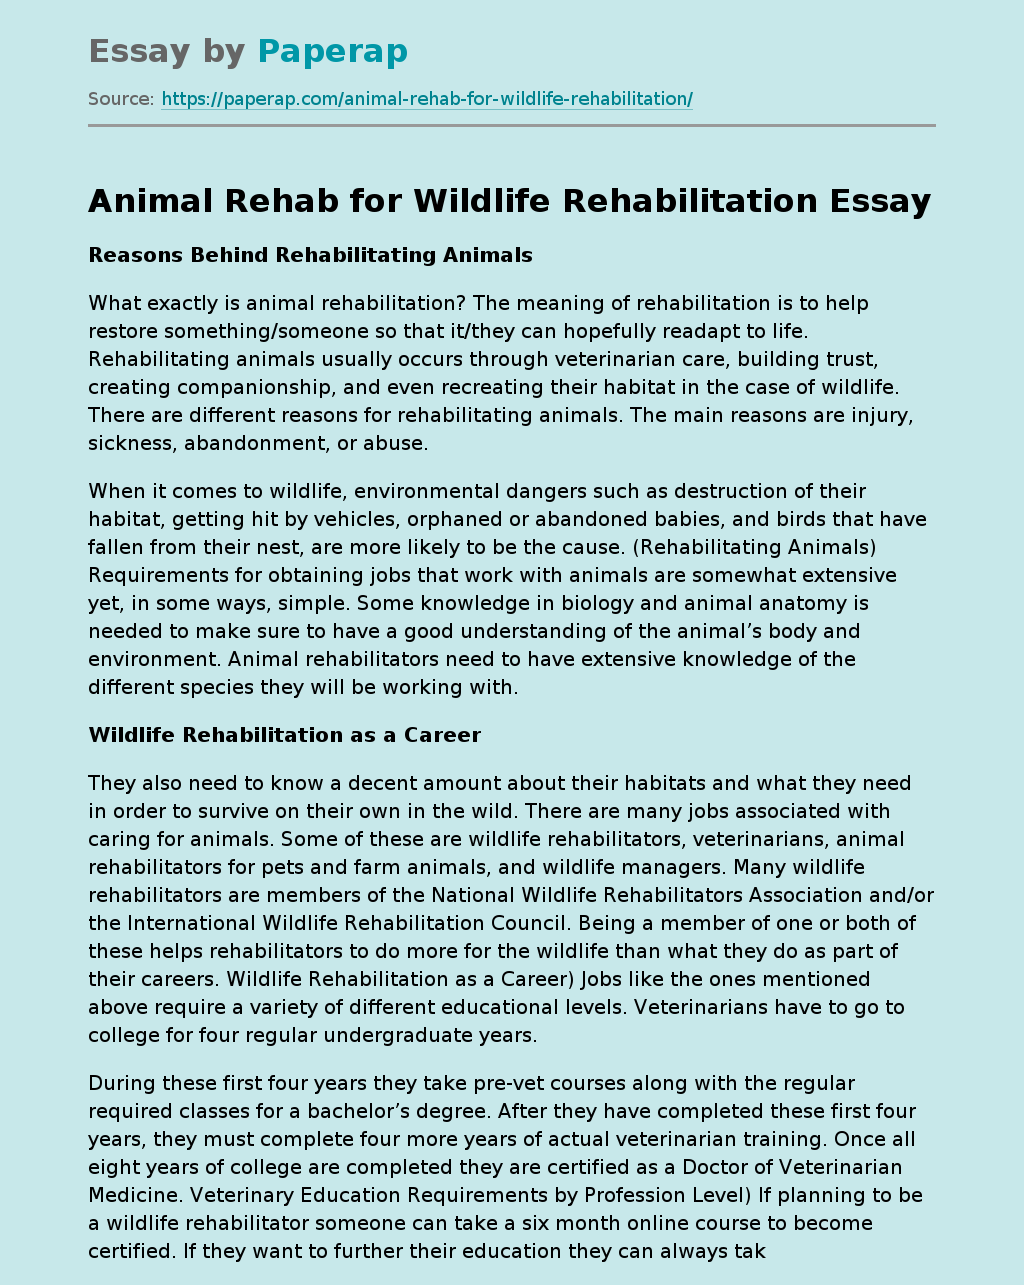 Animal Rehab for Wildlife Rehabilitation